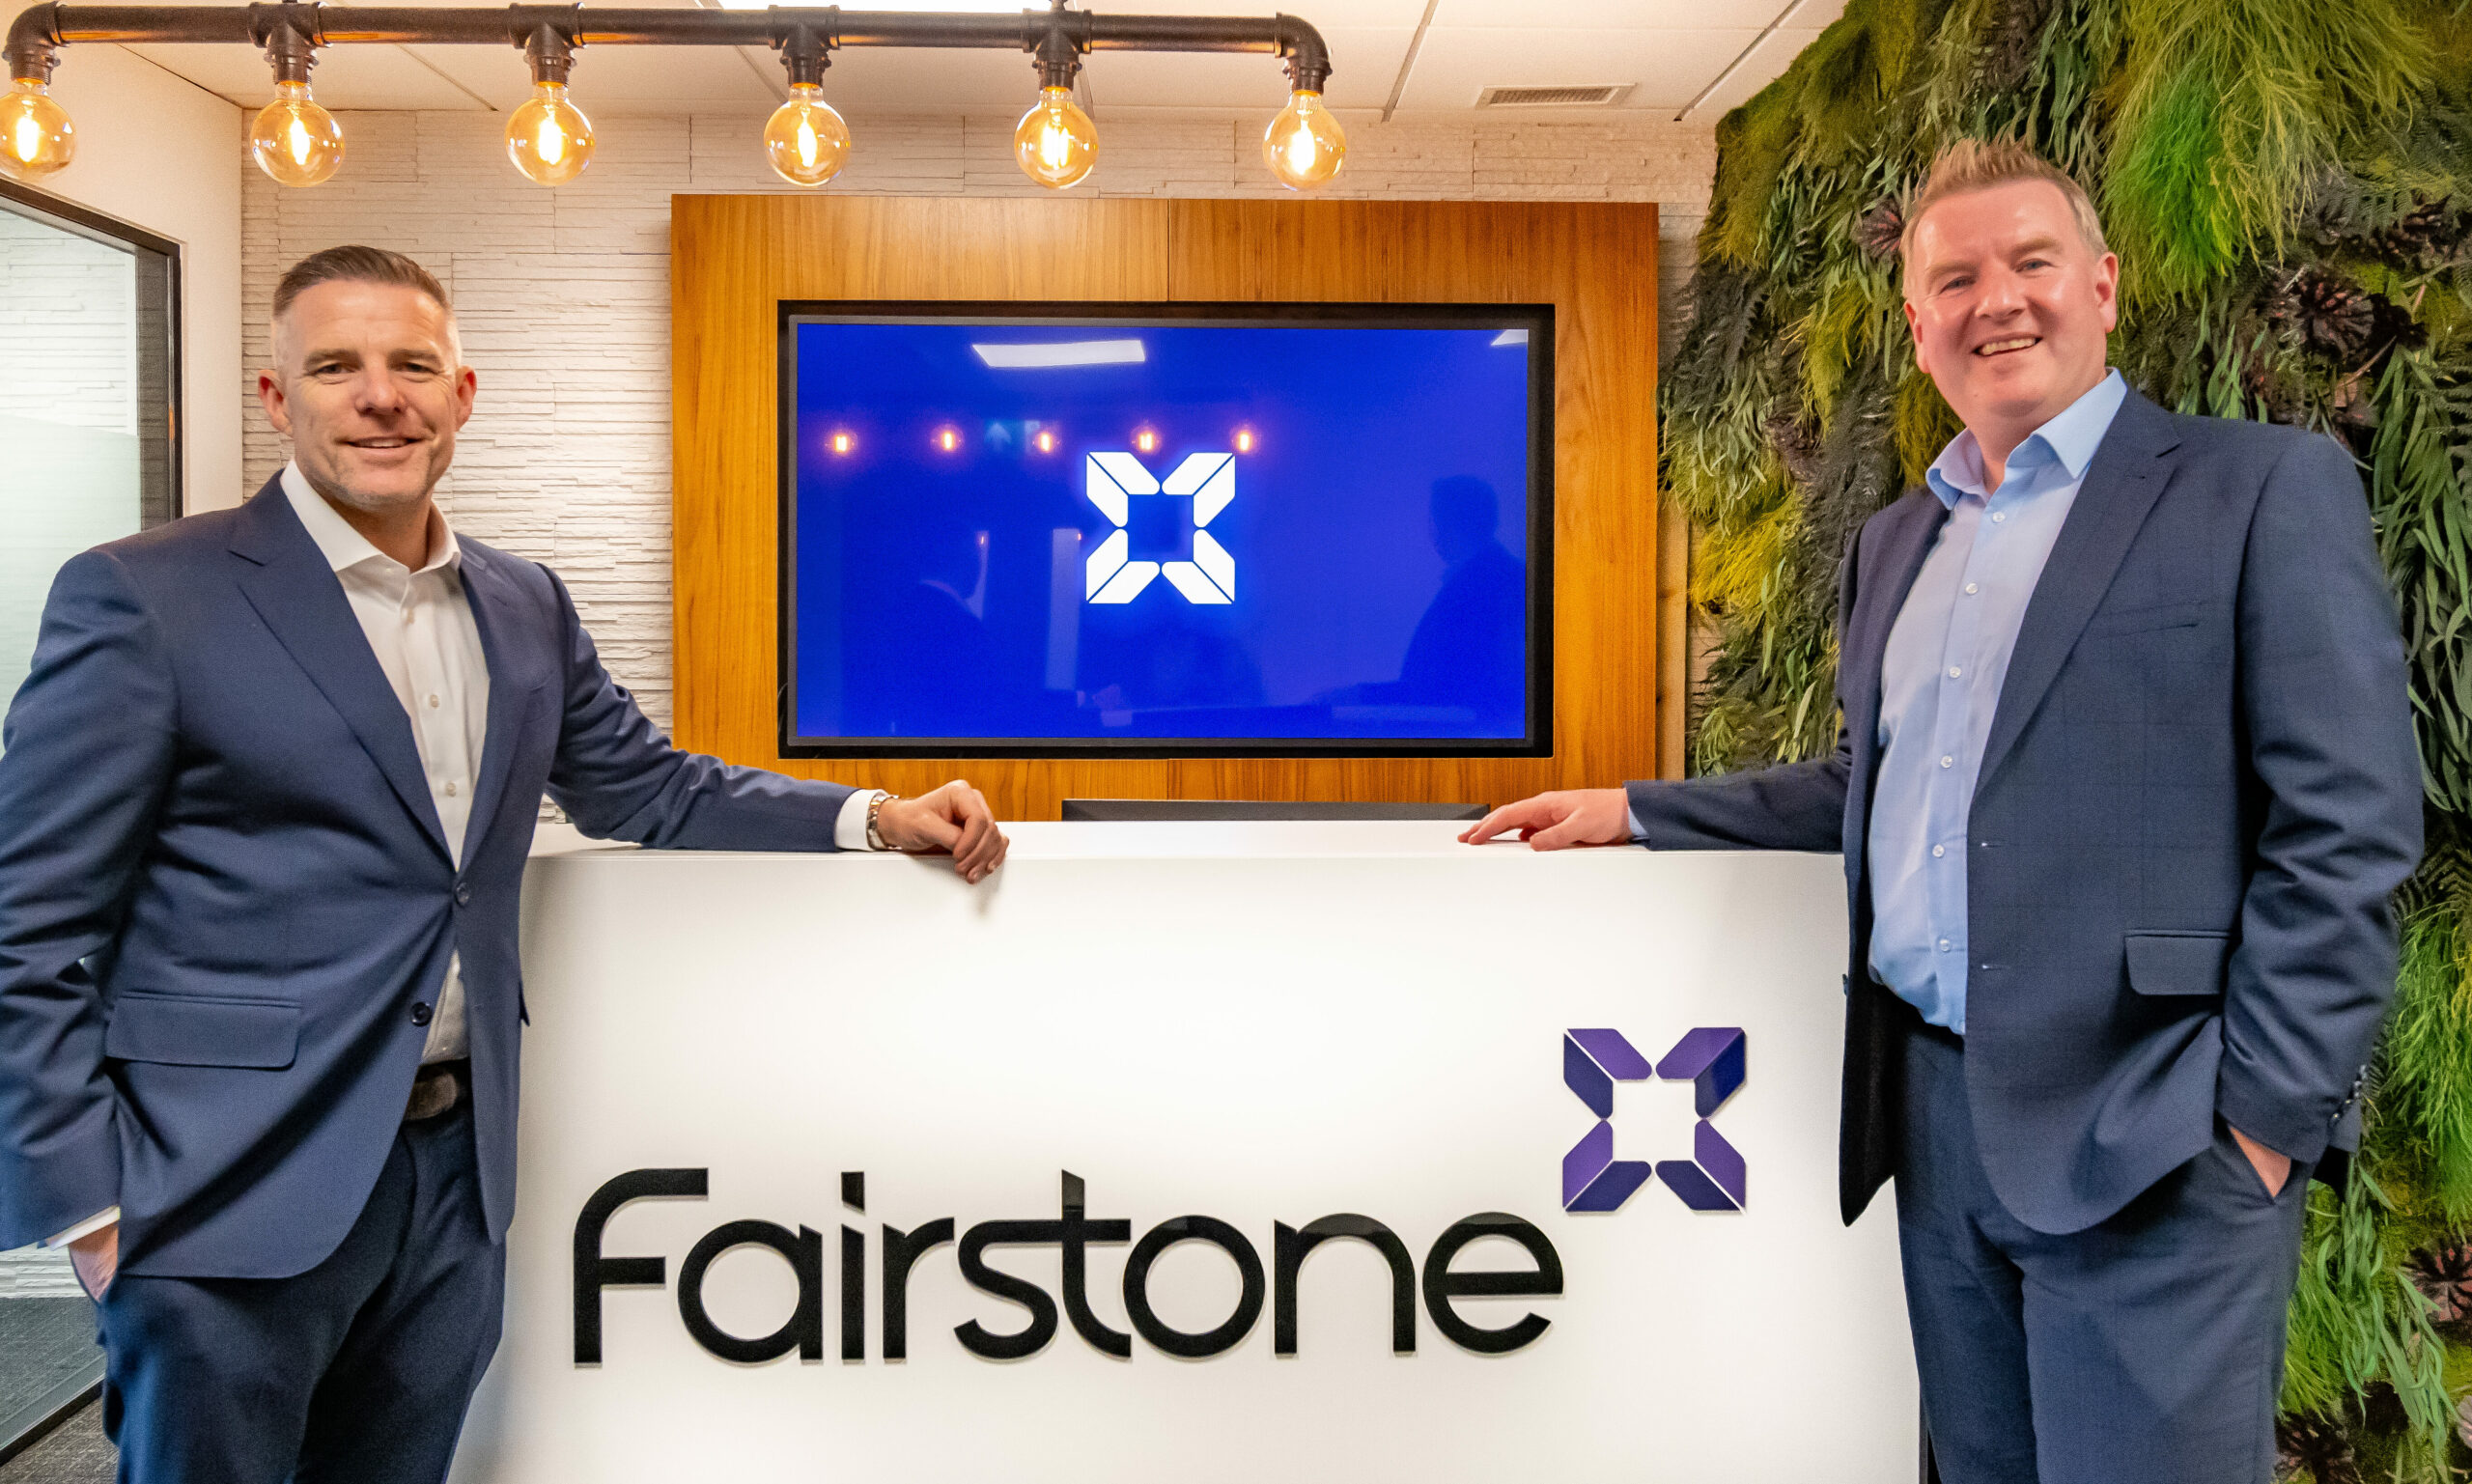 From left Fairstone Ireland CEO Paul Merriman & Conor Carey Fairstone Headford Director with the Fairstone logo background